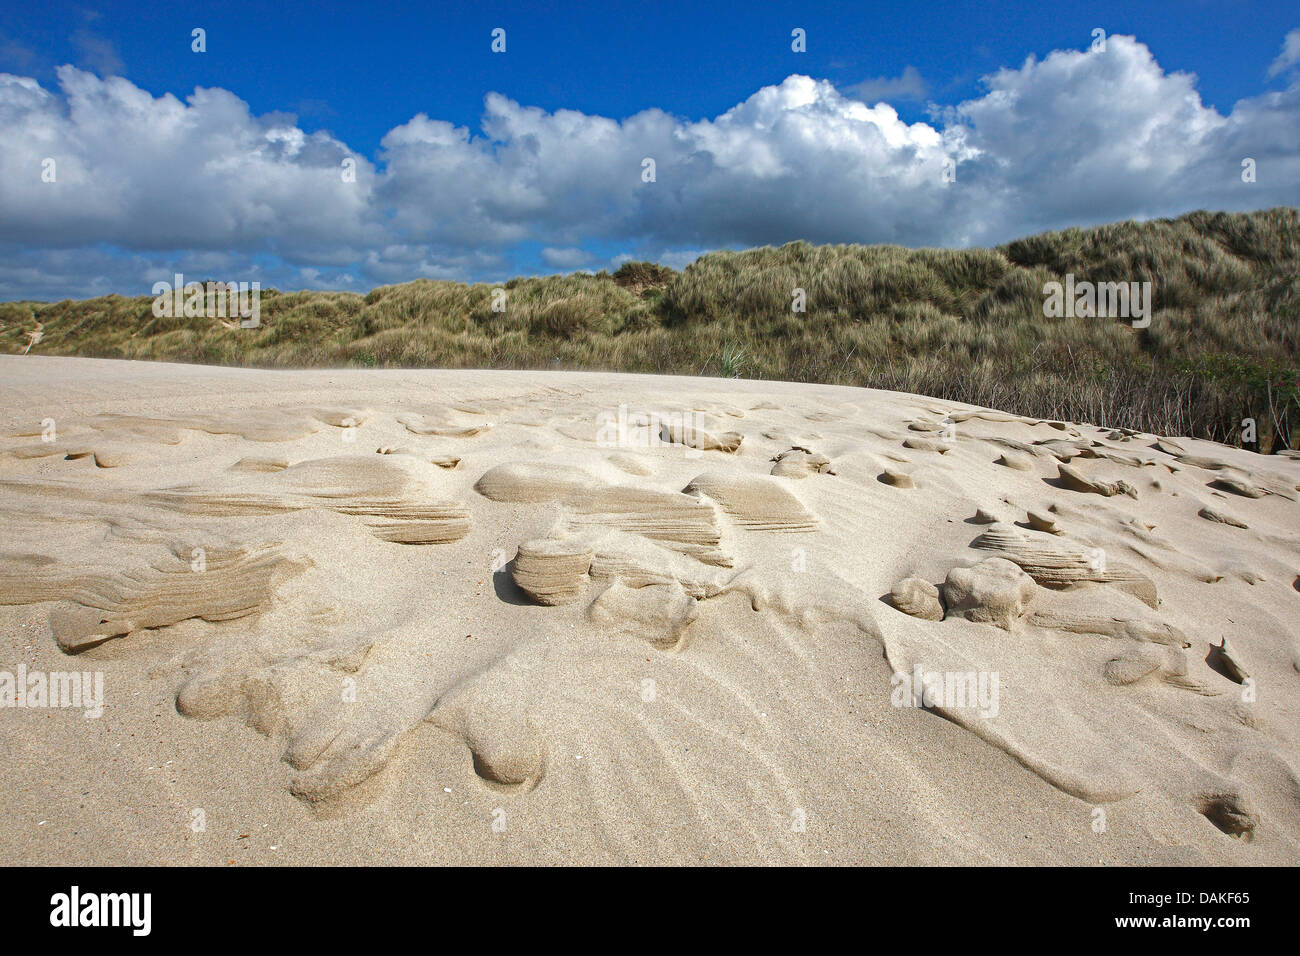 sandy dune landscape, Belgium Stock Photo